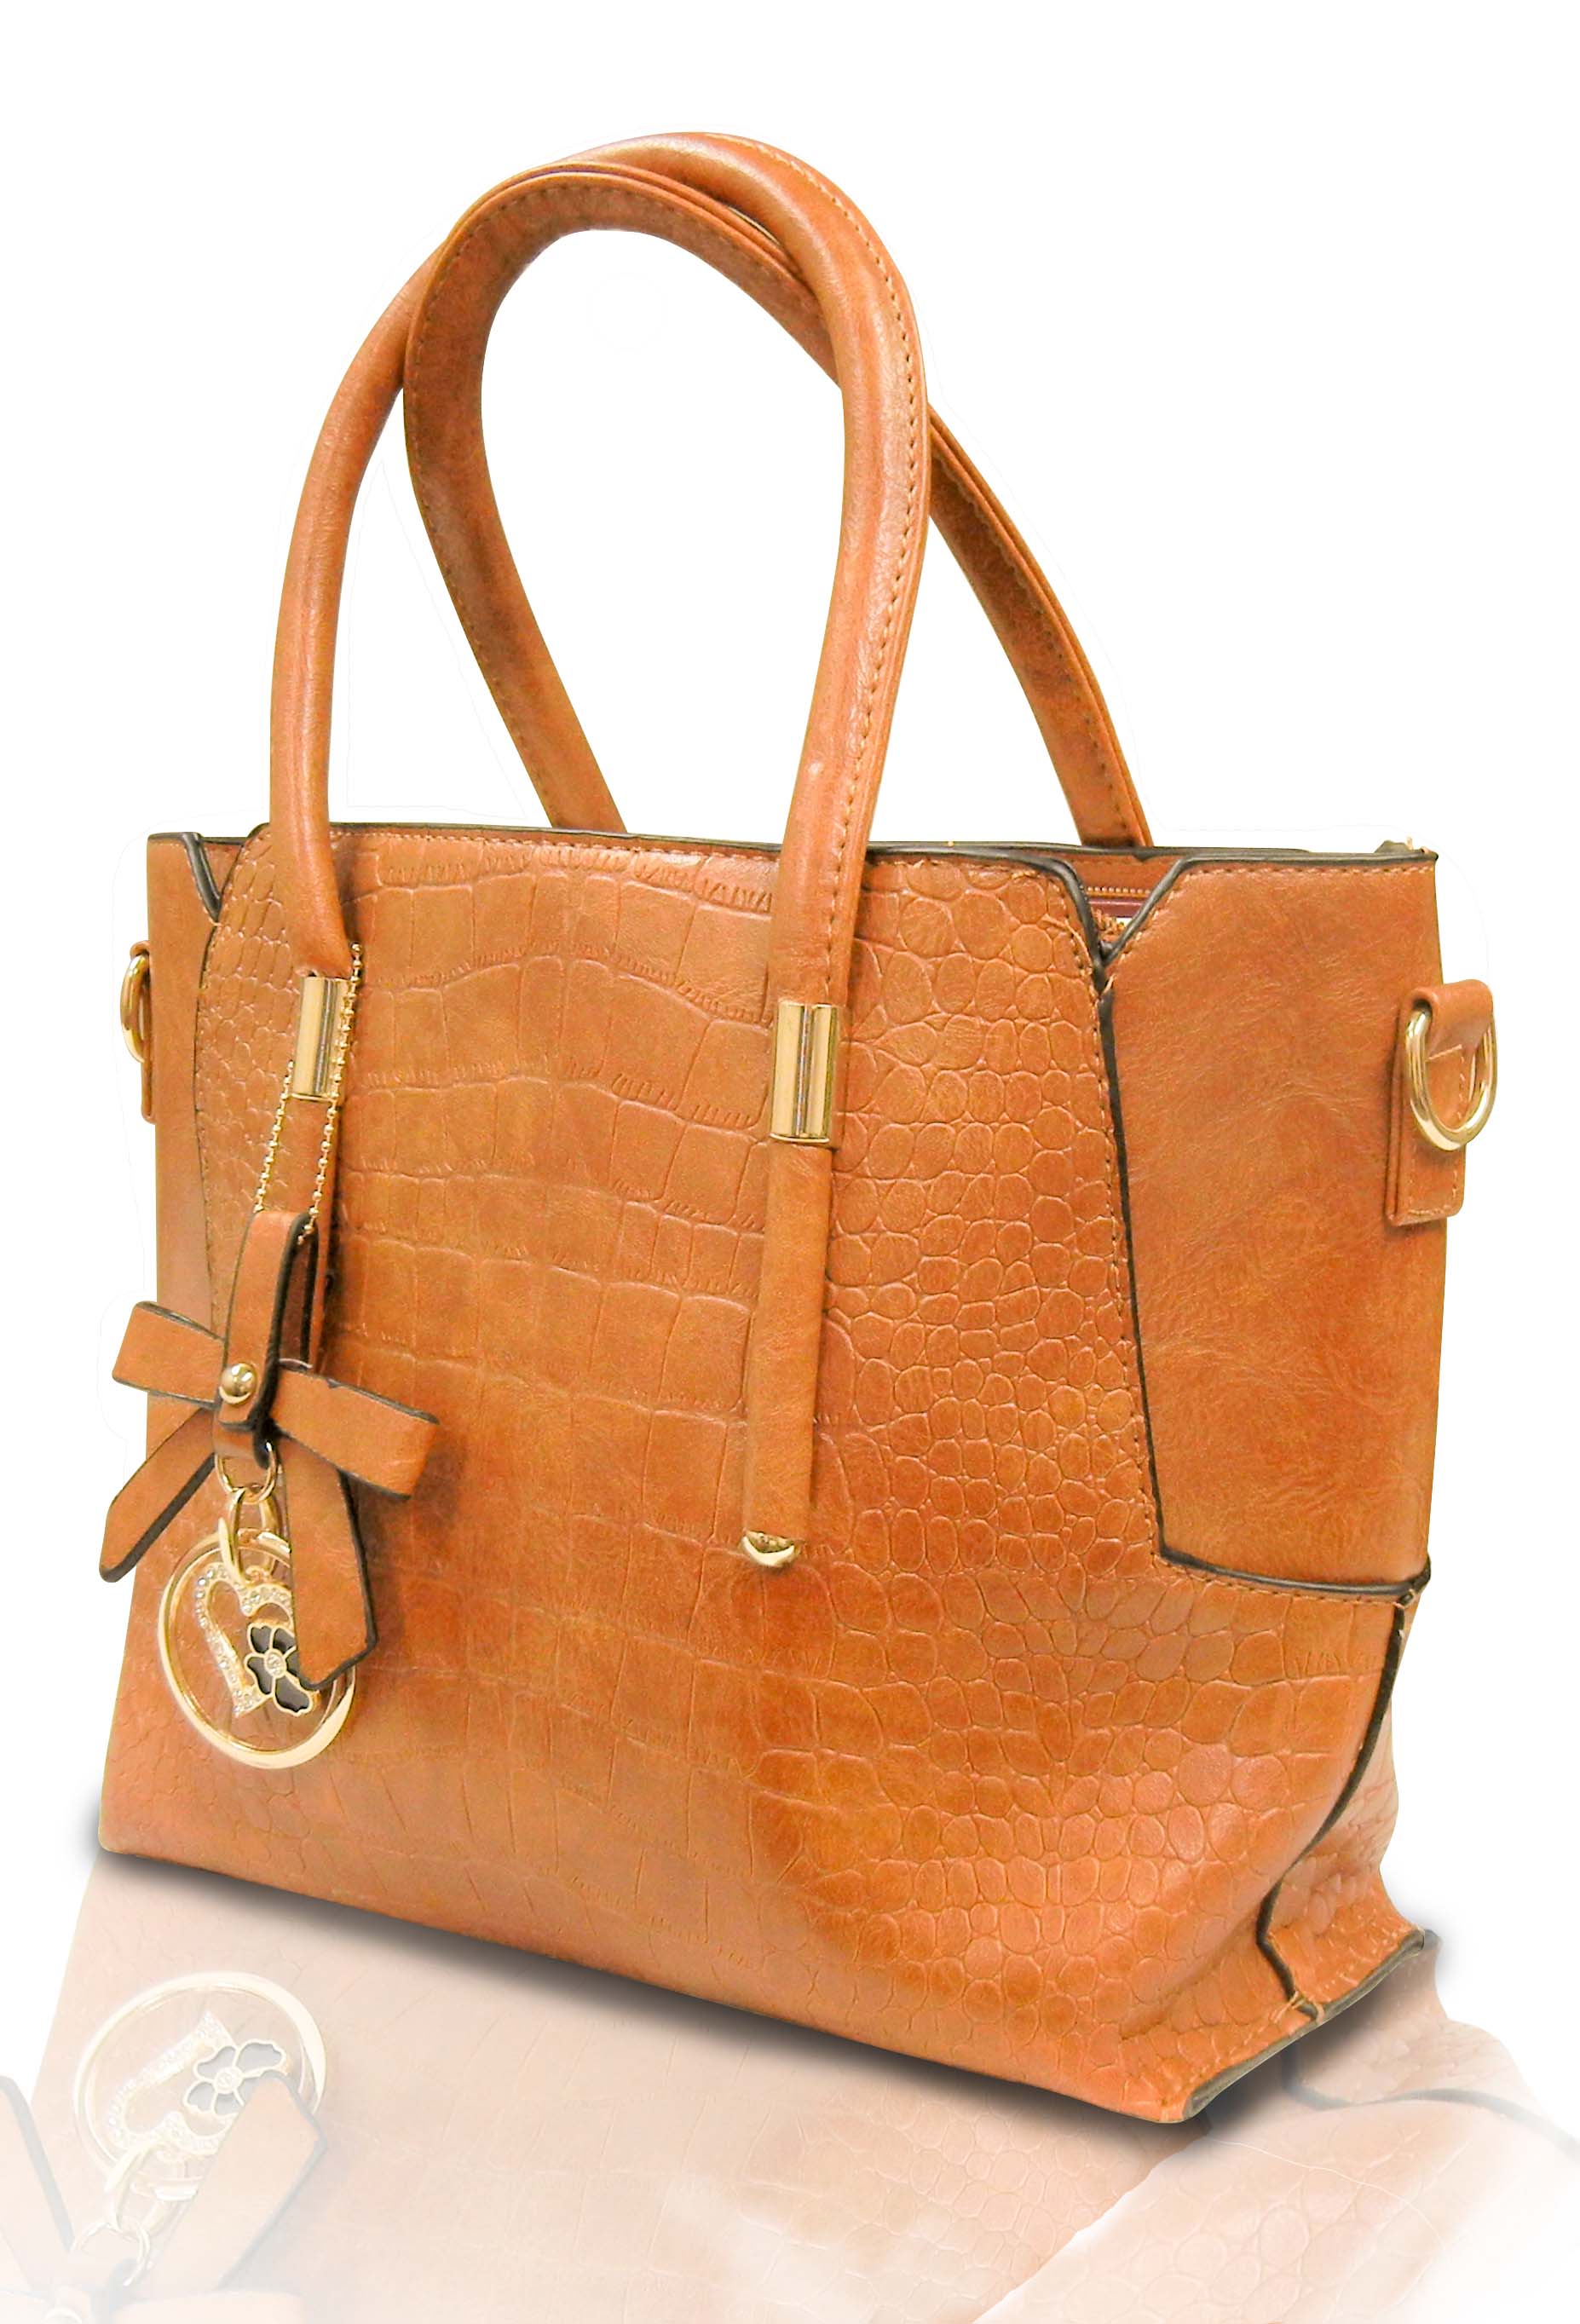 Tan color Ladies Handbag with removable straps, satchel bag,with small companion bag,wallet,